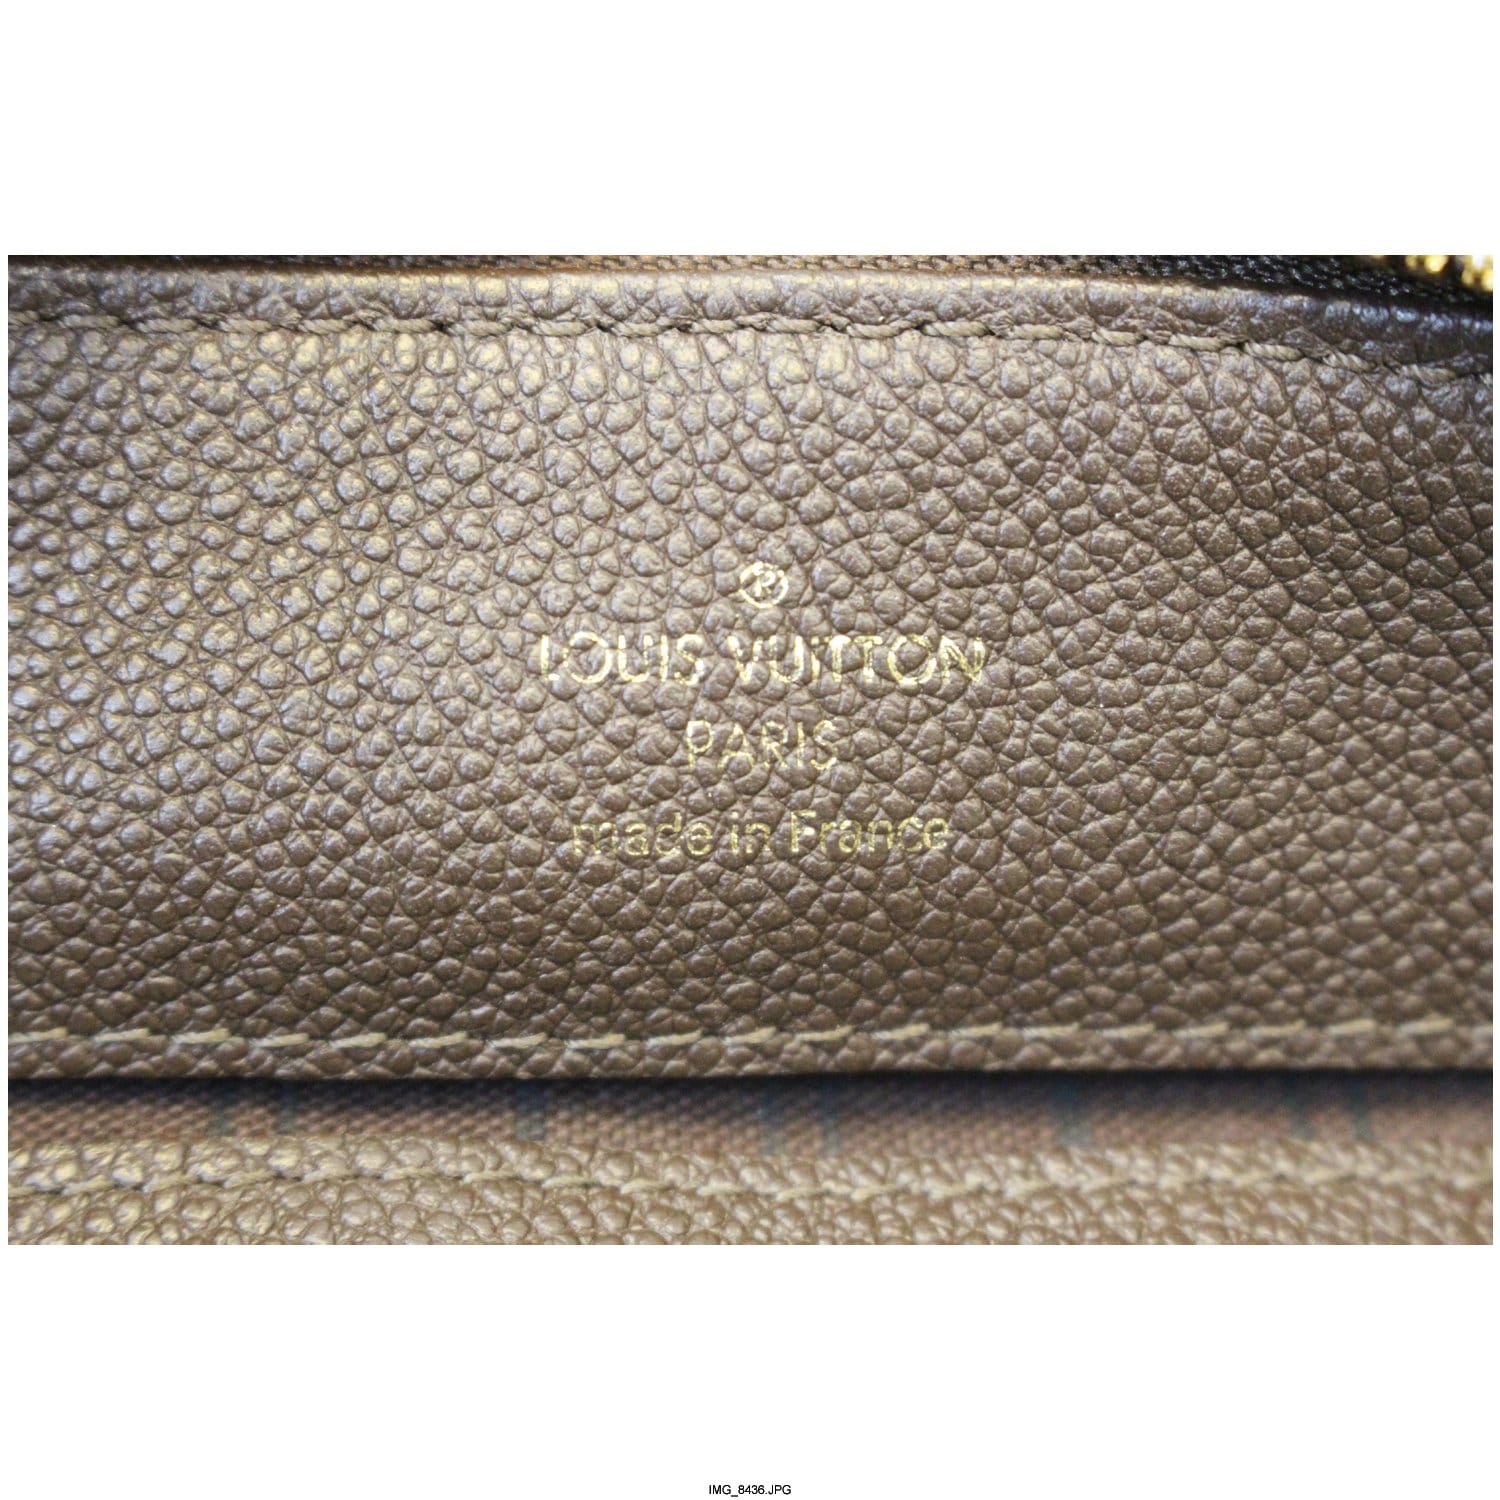 Auth Louis Vuitton Audacieuse Handbag Monogram Empreinte Leather